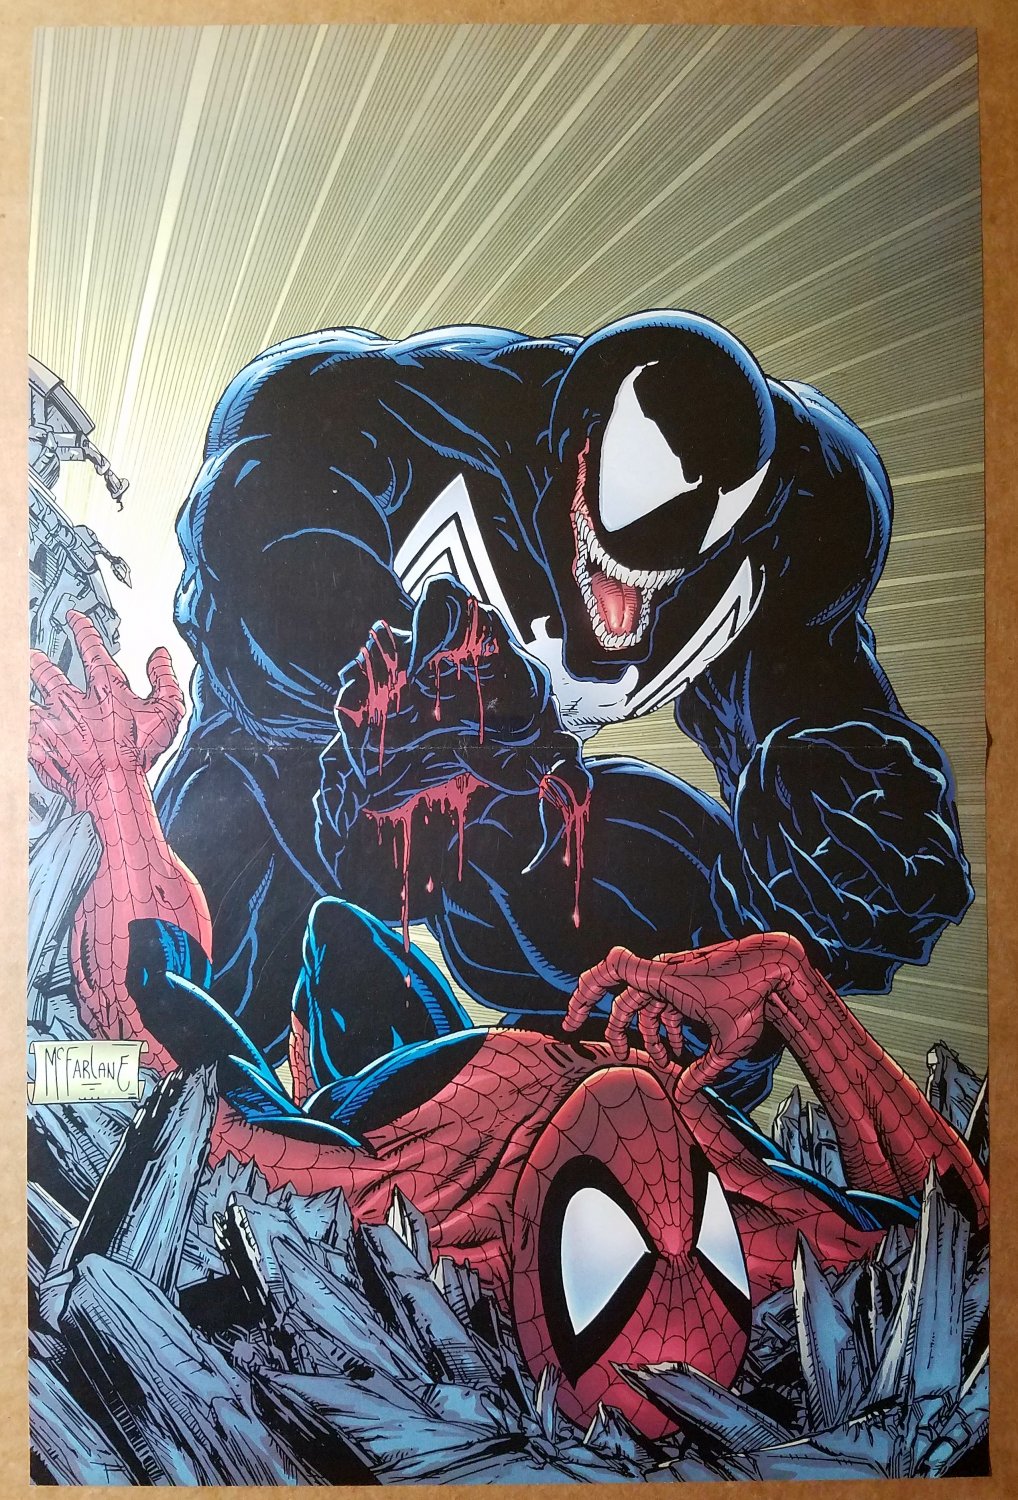 SpiderMan Vs Venom Marvel Comics Poster by Todd McFarlane